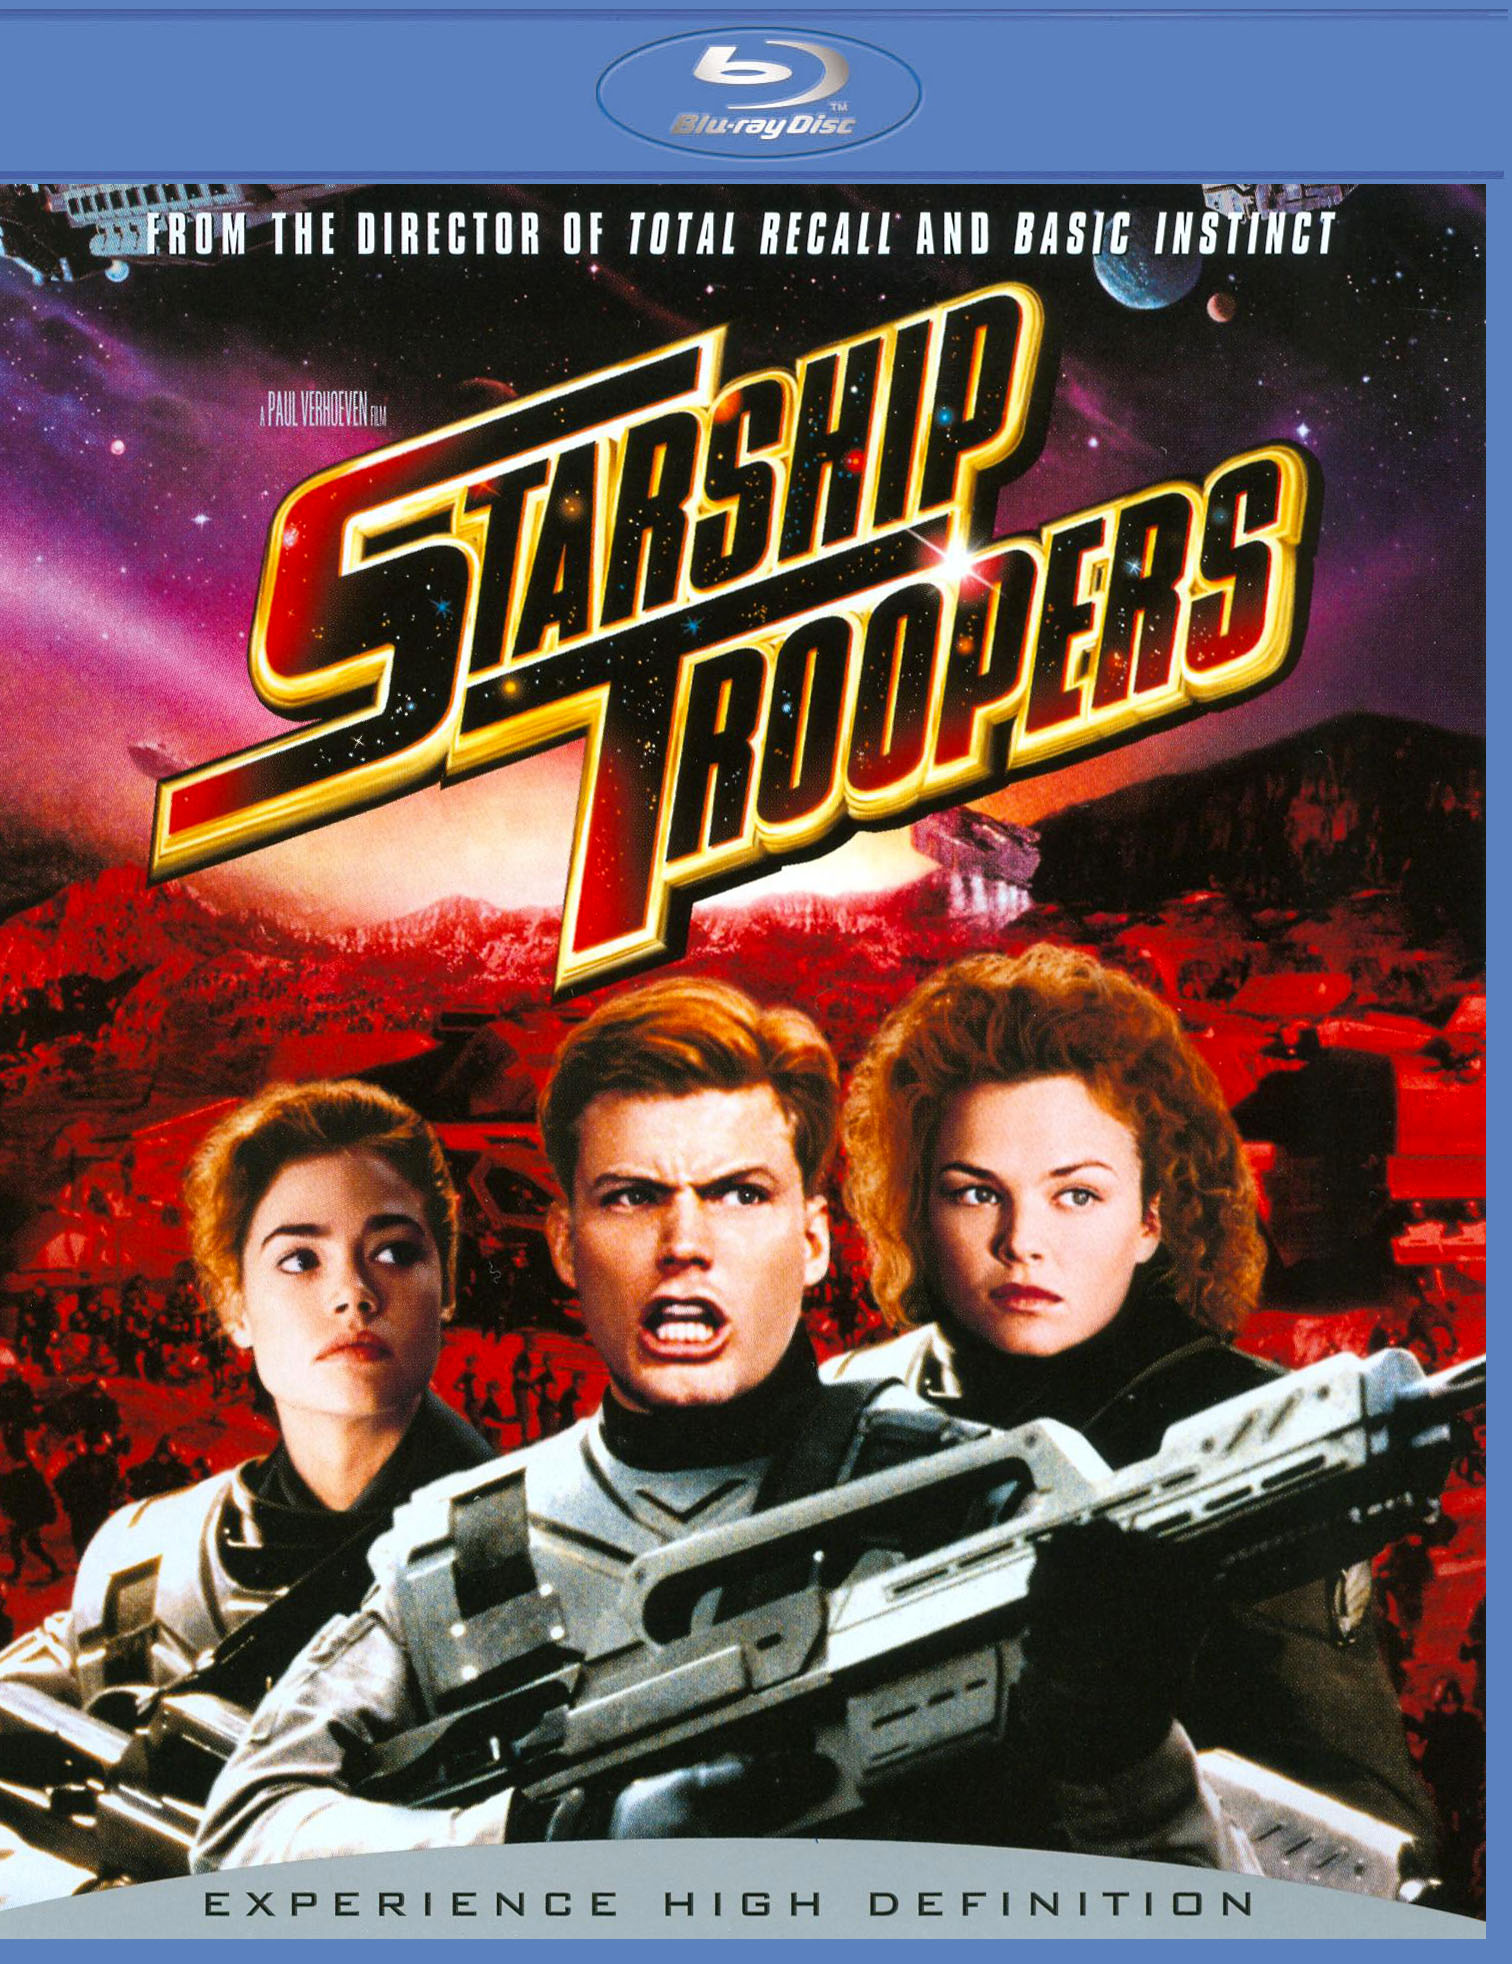 Starship troopers lindsley blake Starship Troopers